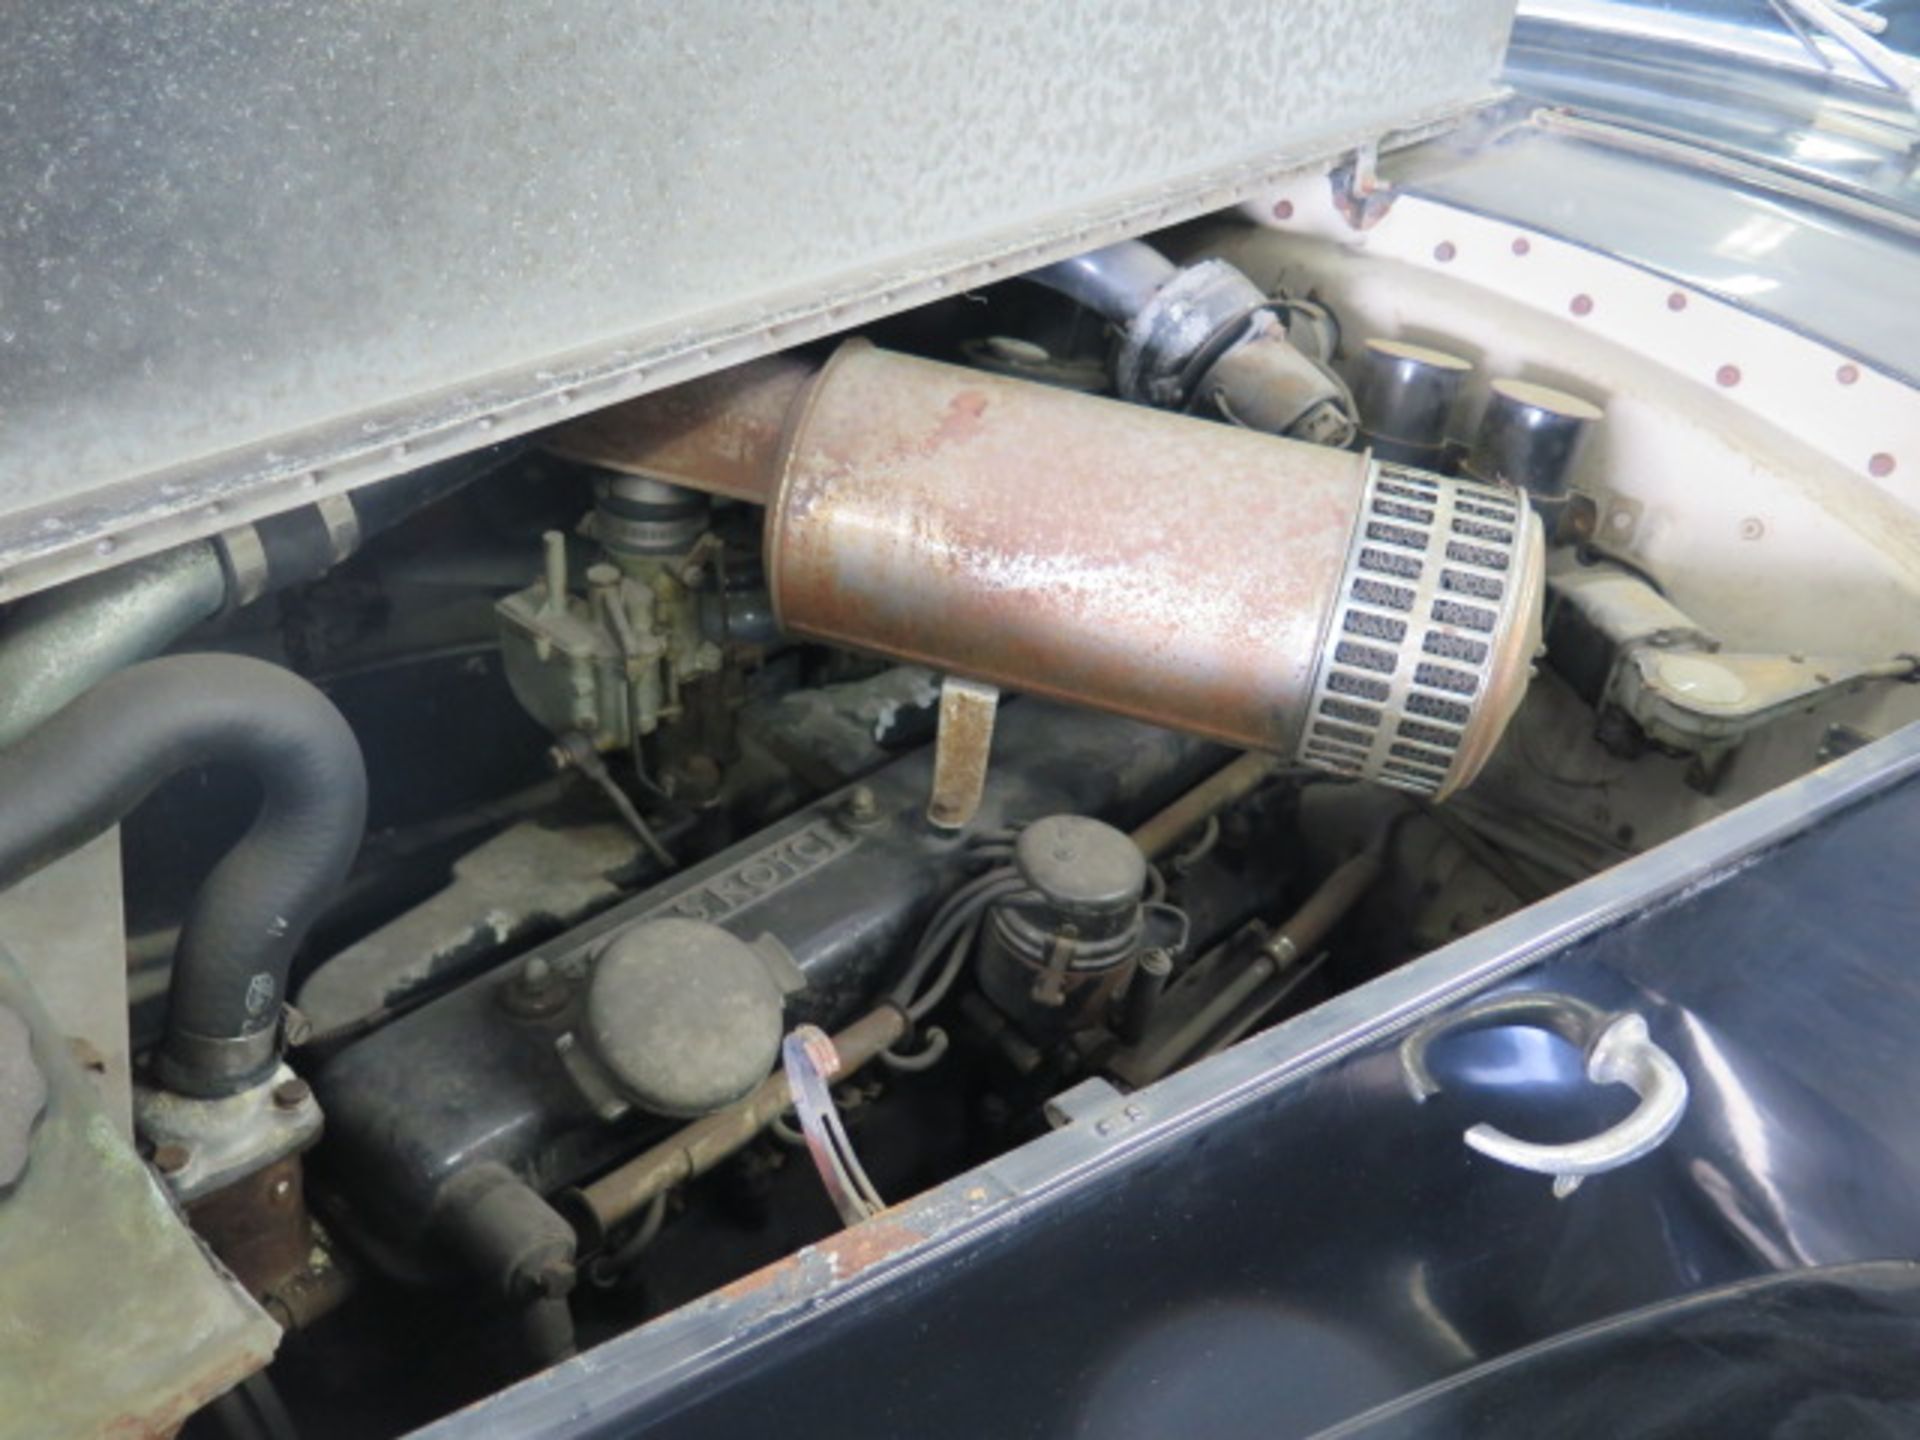 1952 Rolls Royce Silver Dawn Sedan Lics# 2DXP115 w/ Left Hand Steering, Gas, s/n S-78-C, SOLD AS IS - Image 12 of 38